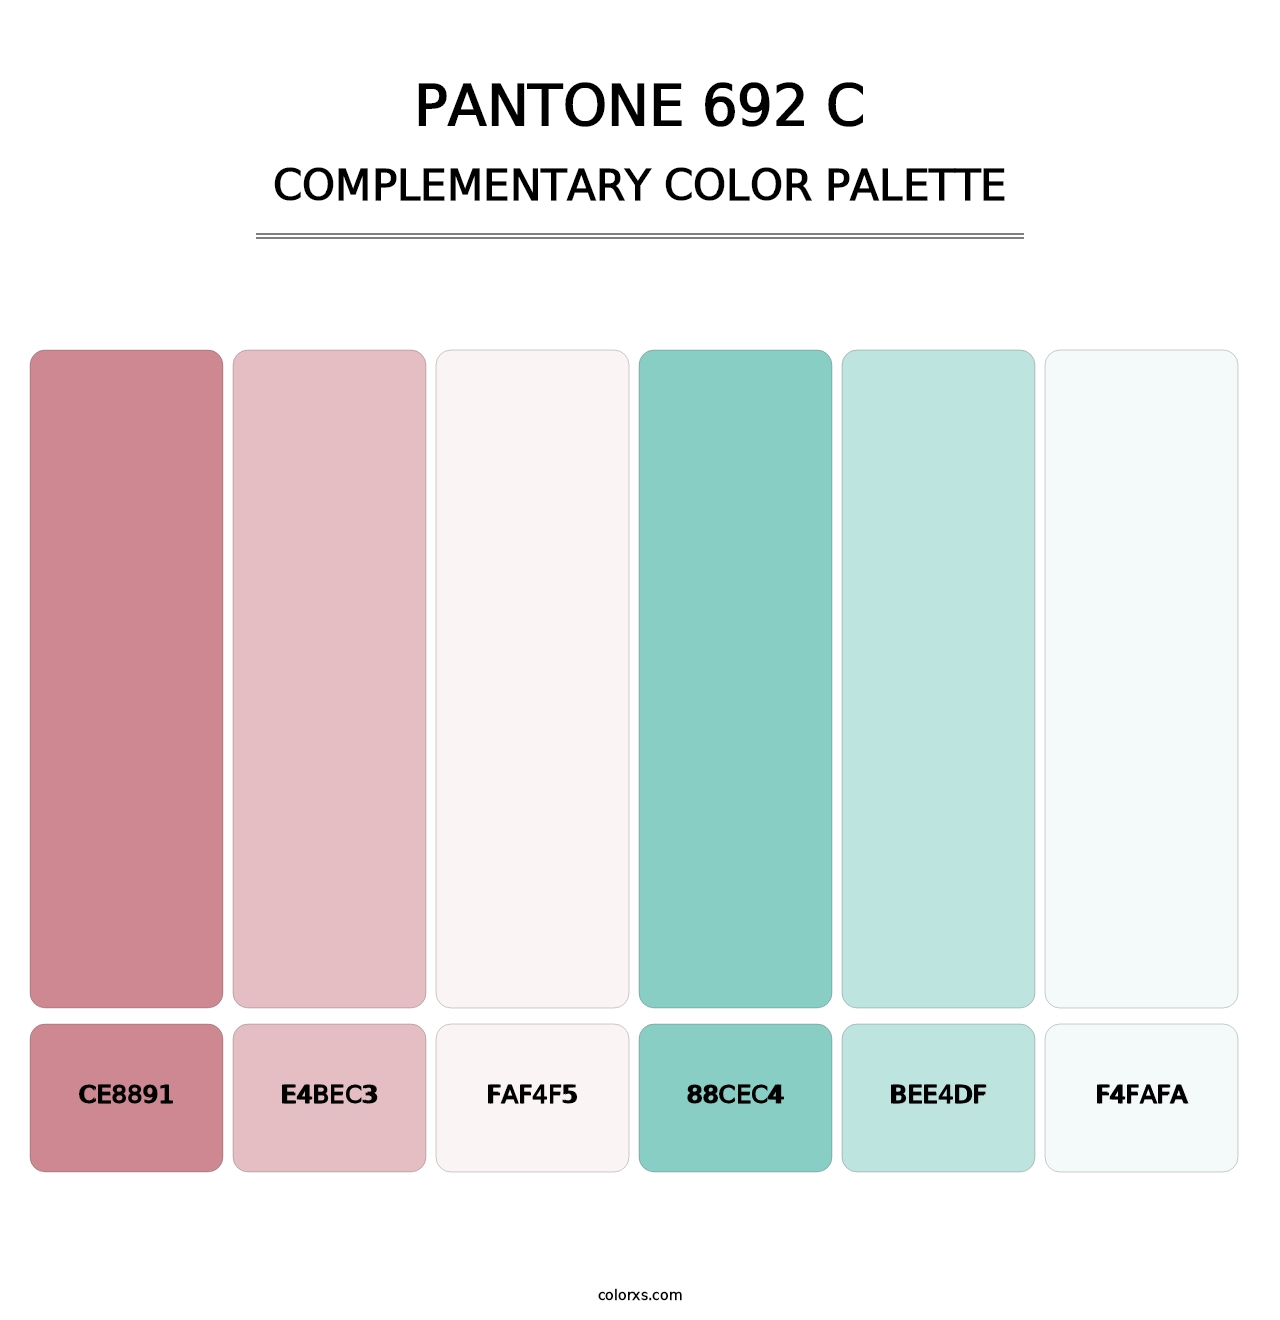 PANTONE 692 C - Complementary Color Palette